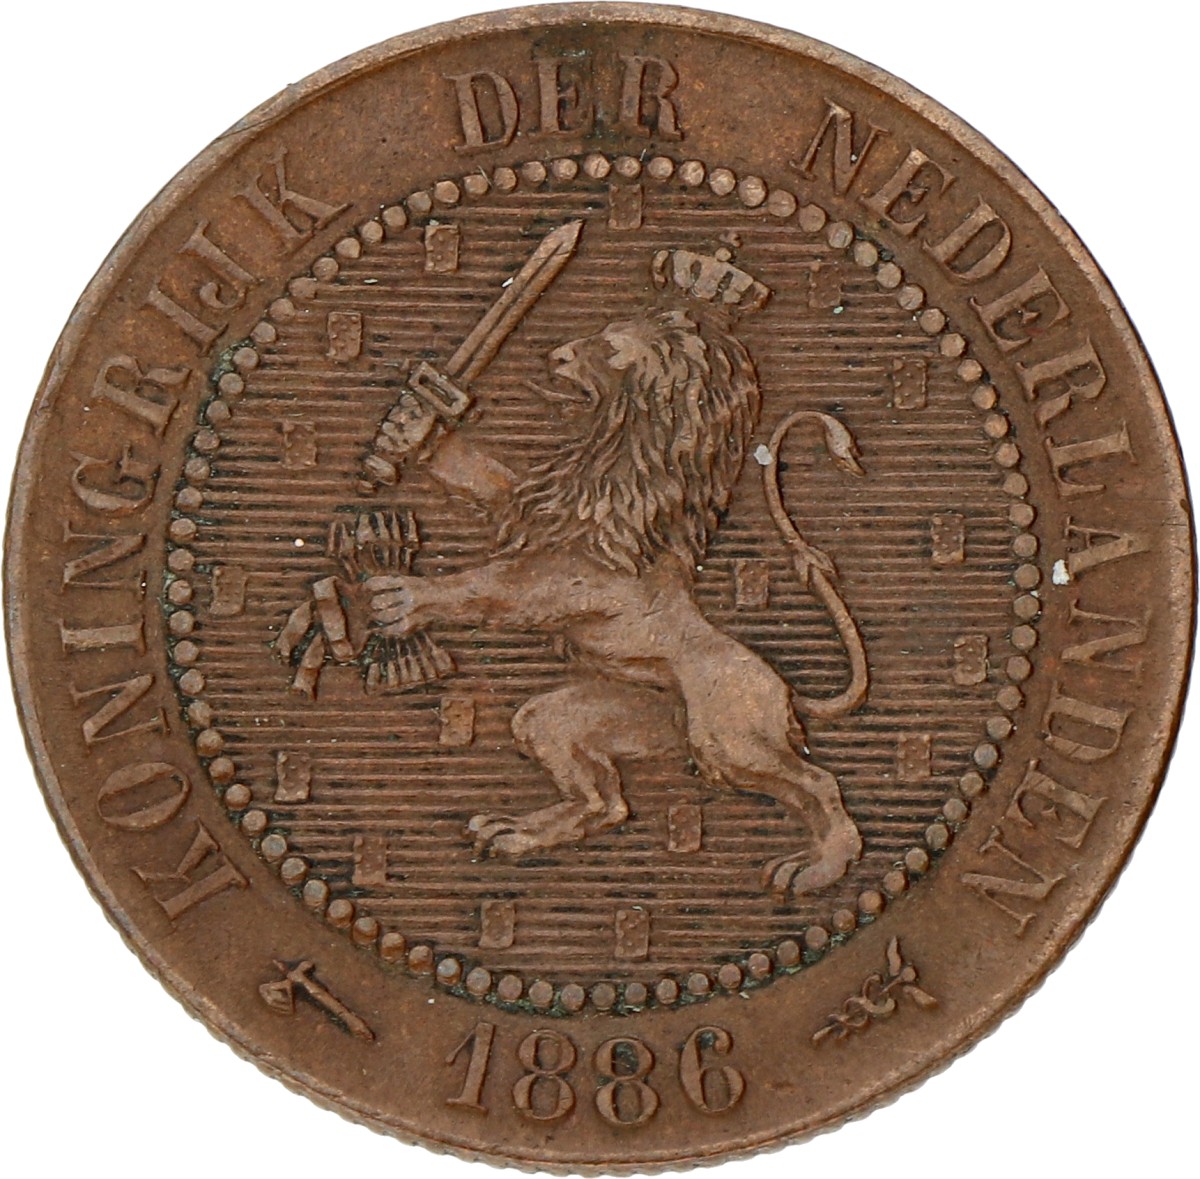 2½ Cent. Willem III. 1886. Prachtig.